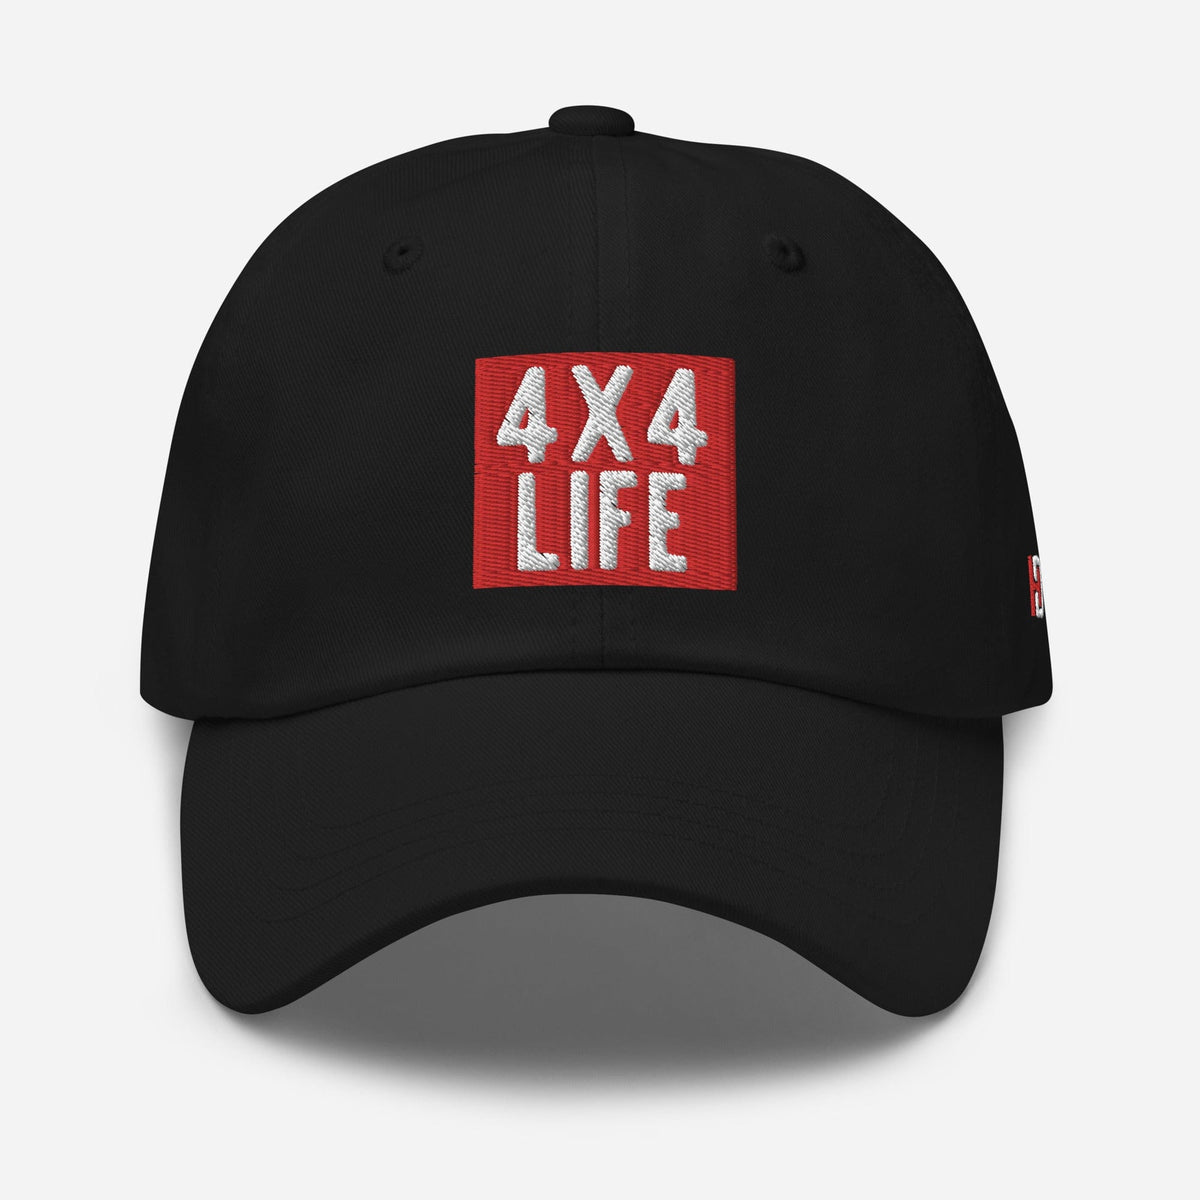 4x4 Life Dad hat Black